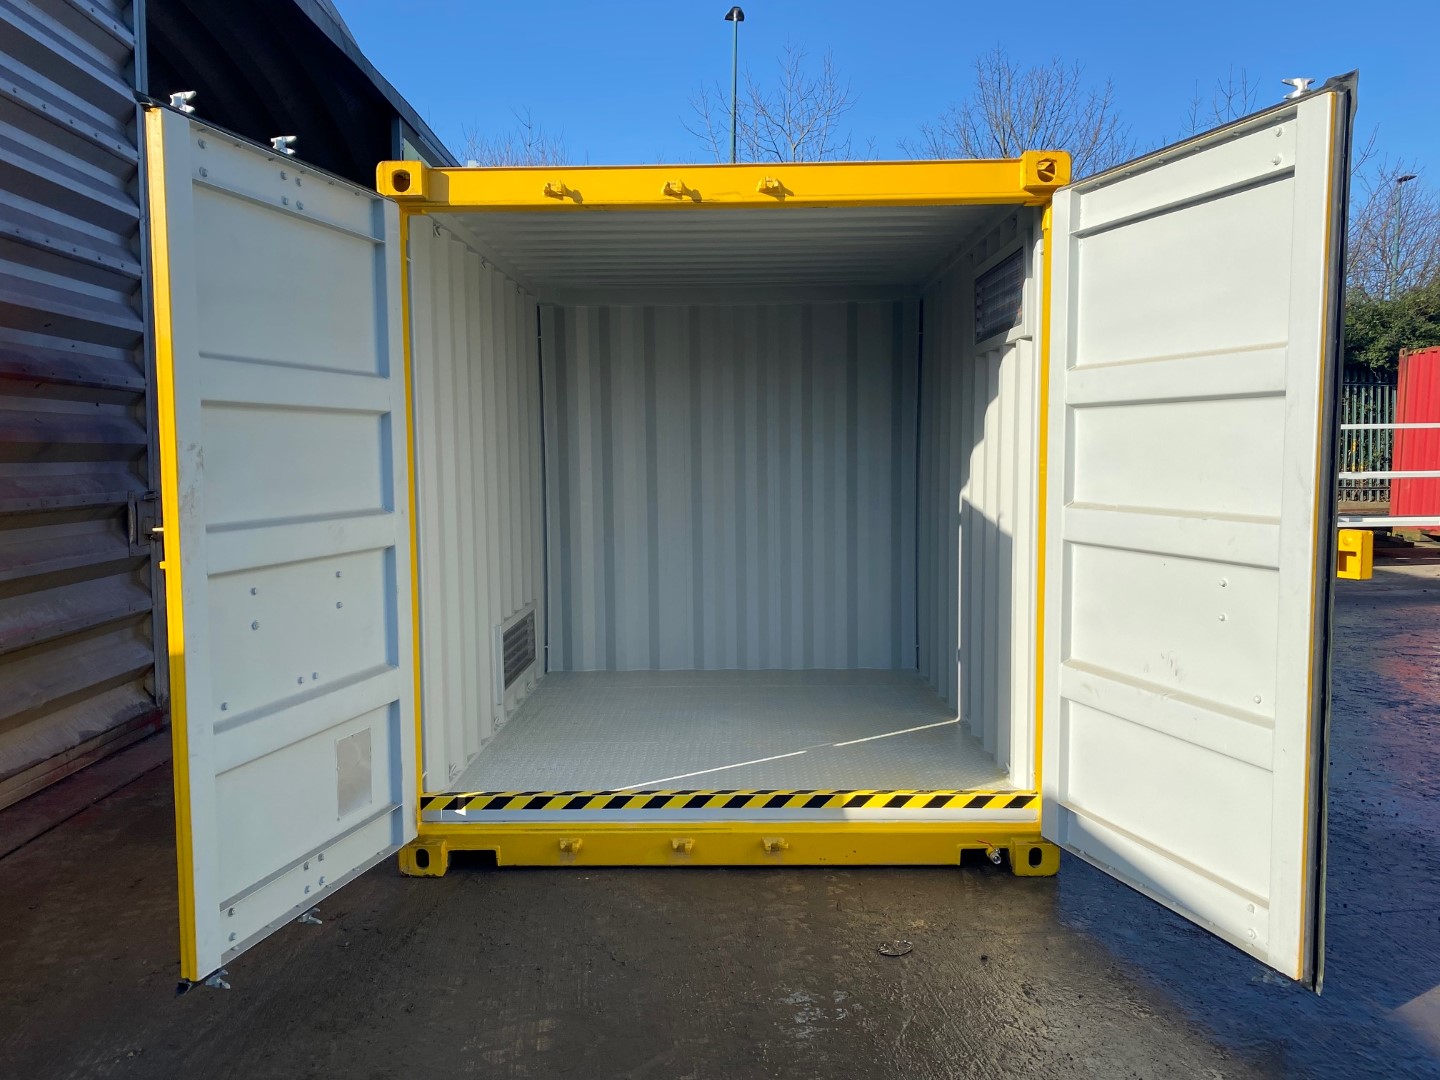 UK Suppliers of Hazardous Material Storage Solutions